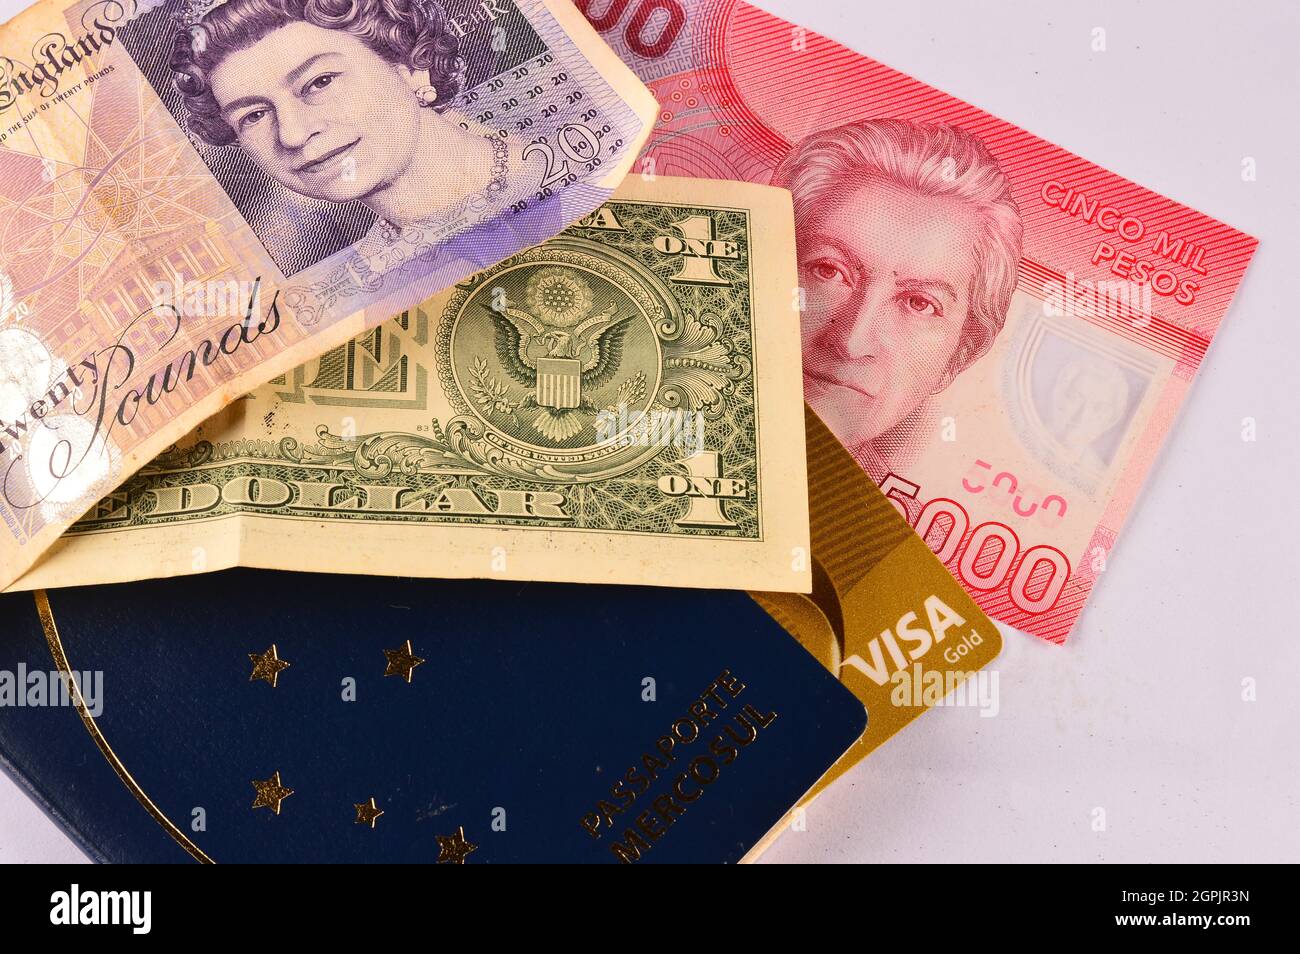 Travelling and exchange money photo concept Stock Photo